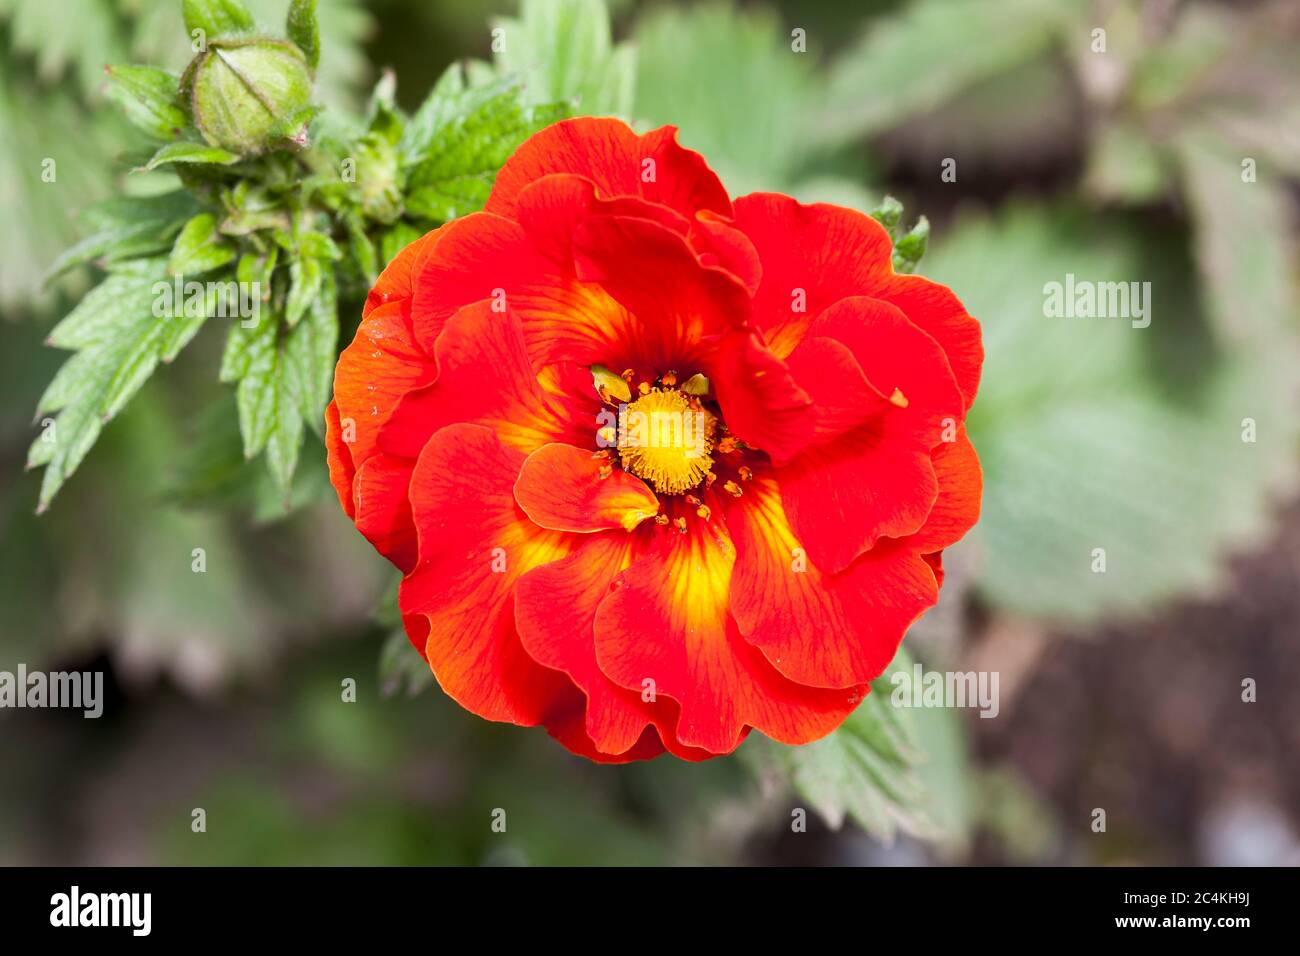 Potentilla 'William Rollison' a red semi double flowered plant Stock Photo